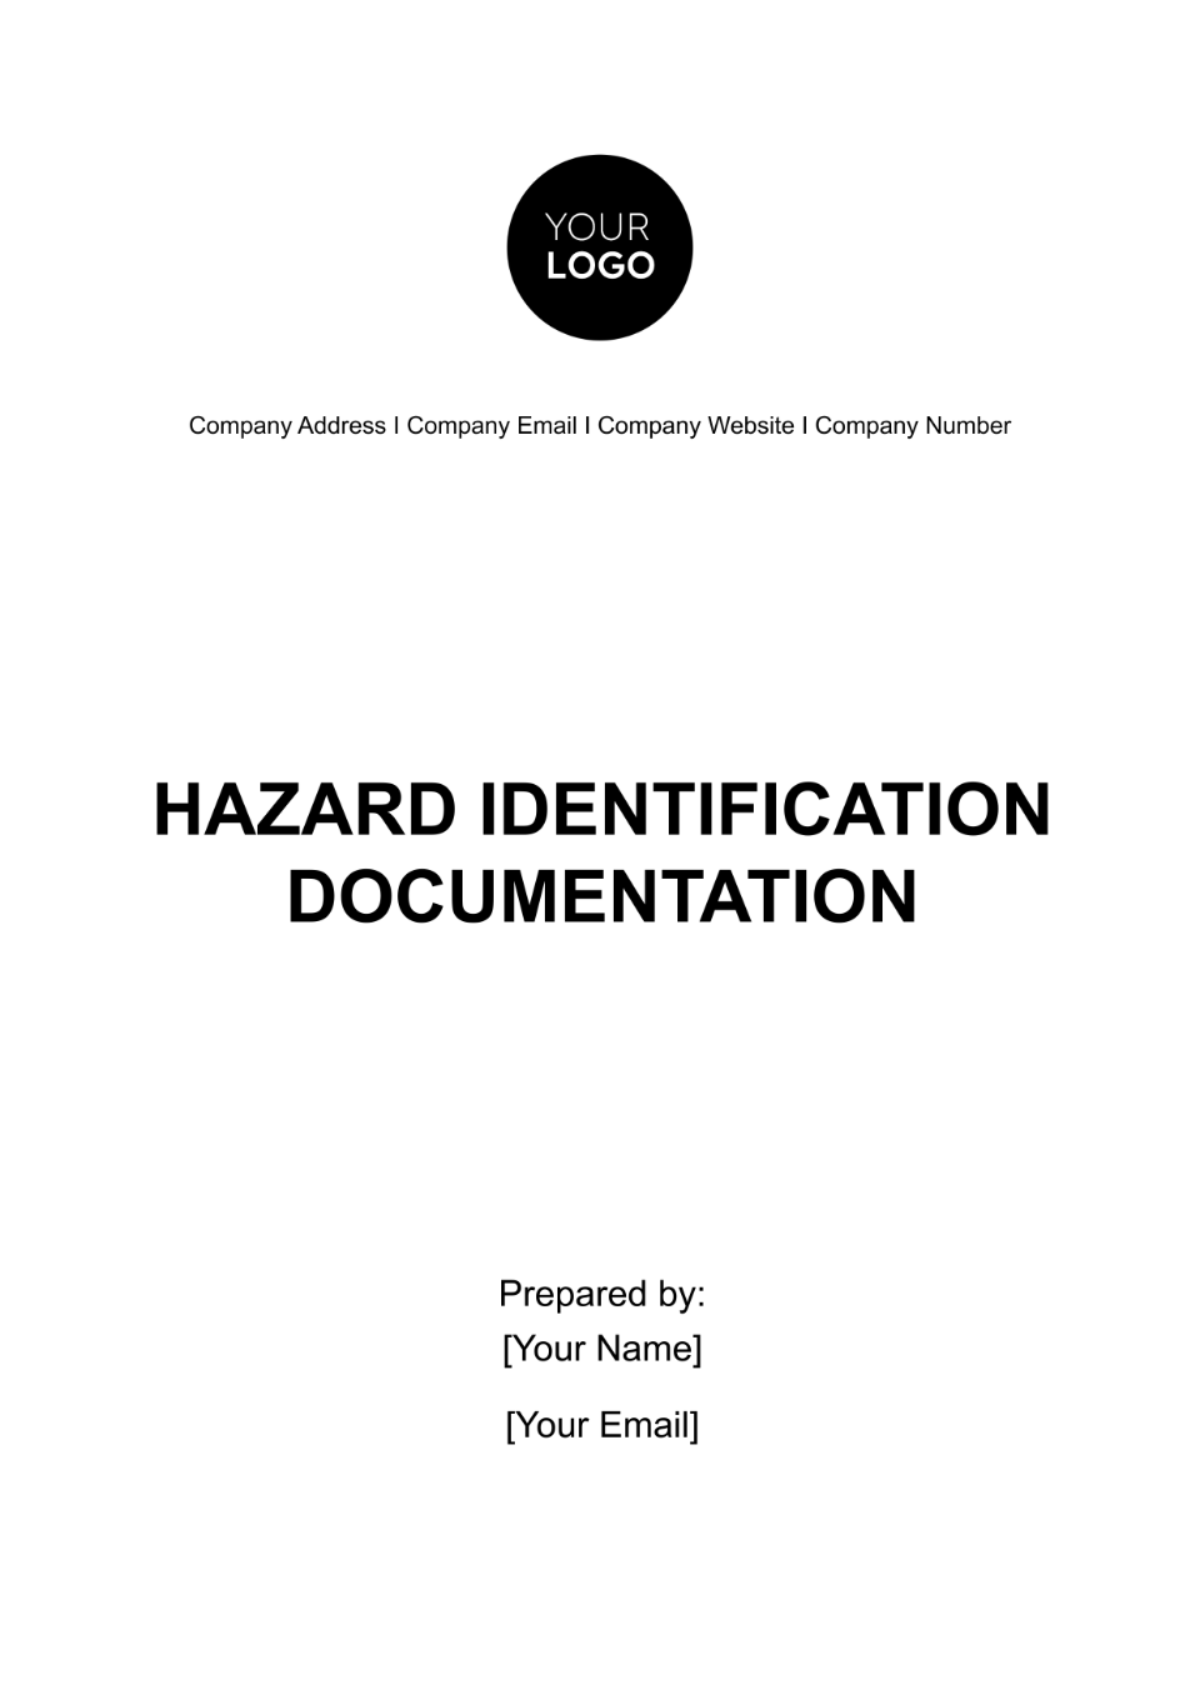 Free Hazard Identification Documentation Template